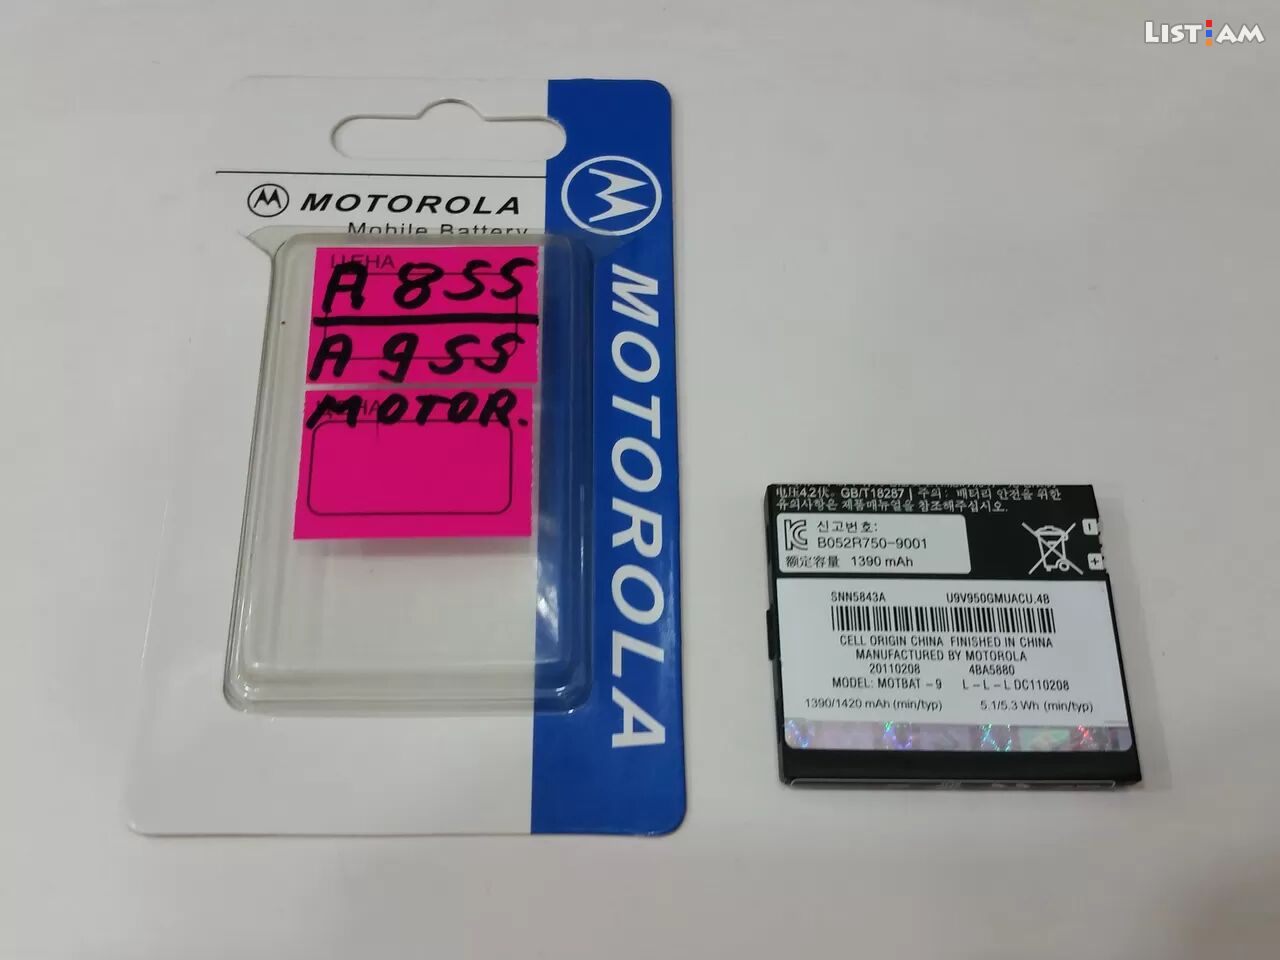 Motorola a855